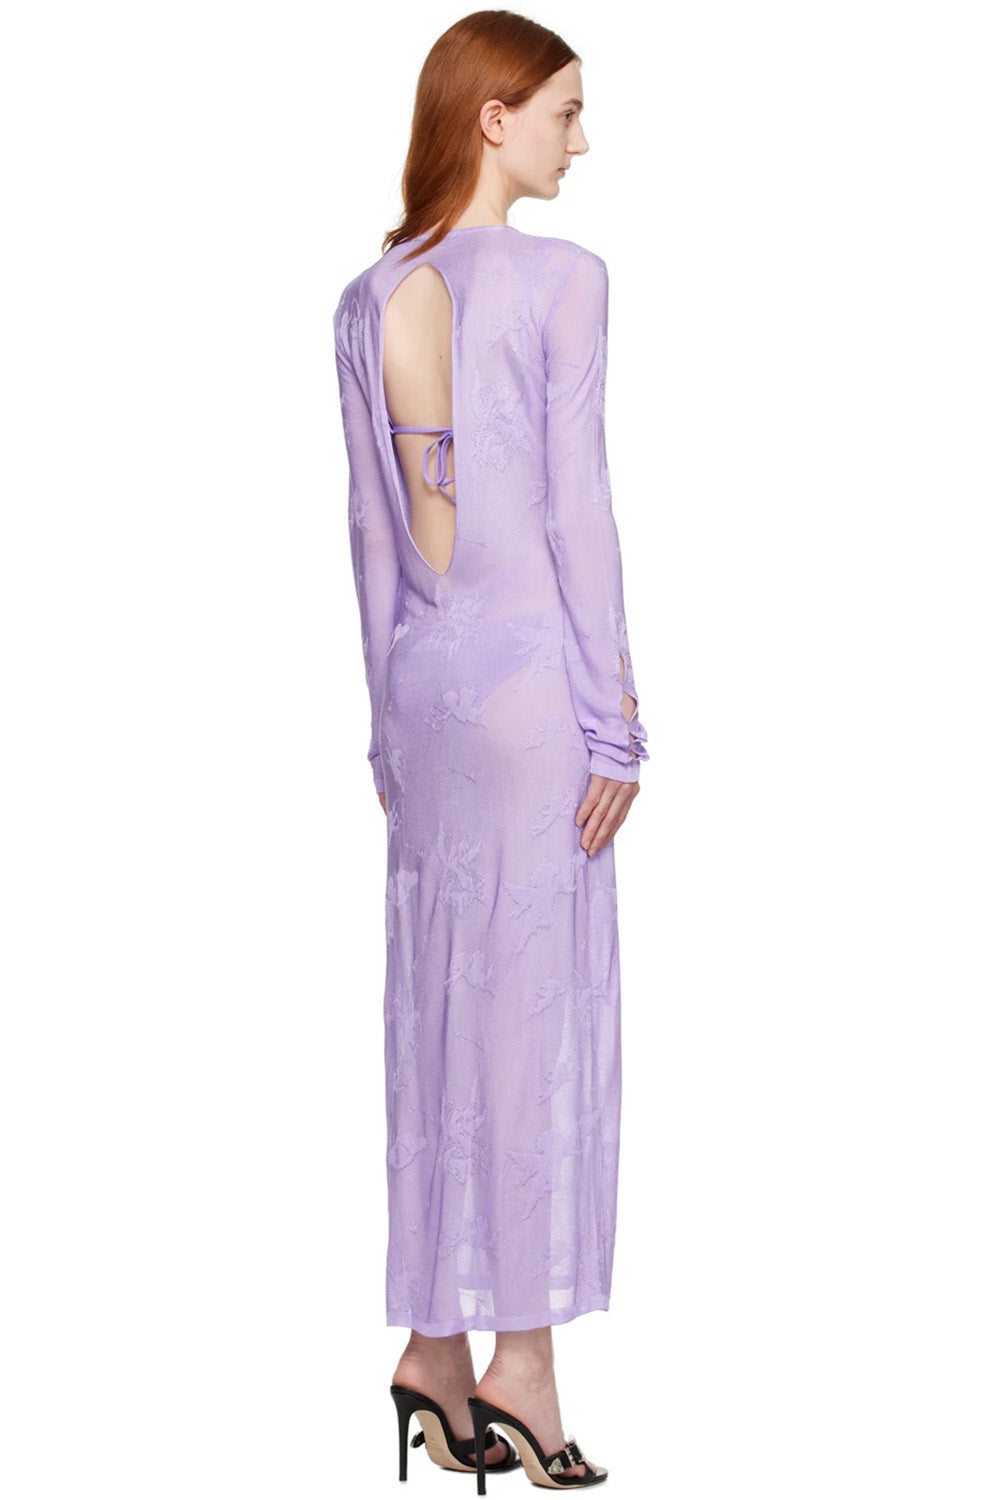 Marco Rambaldi - Transparent Viscose Knitwear Long Dress: Lilac